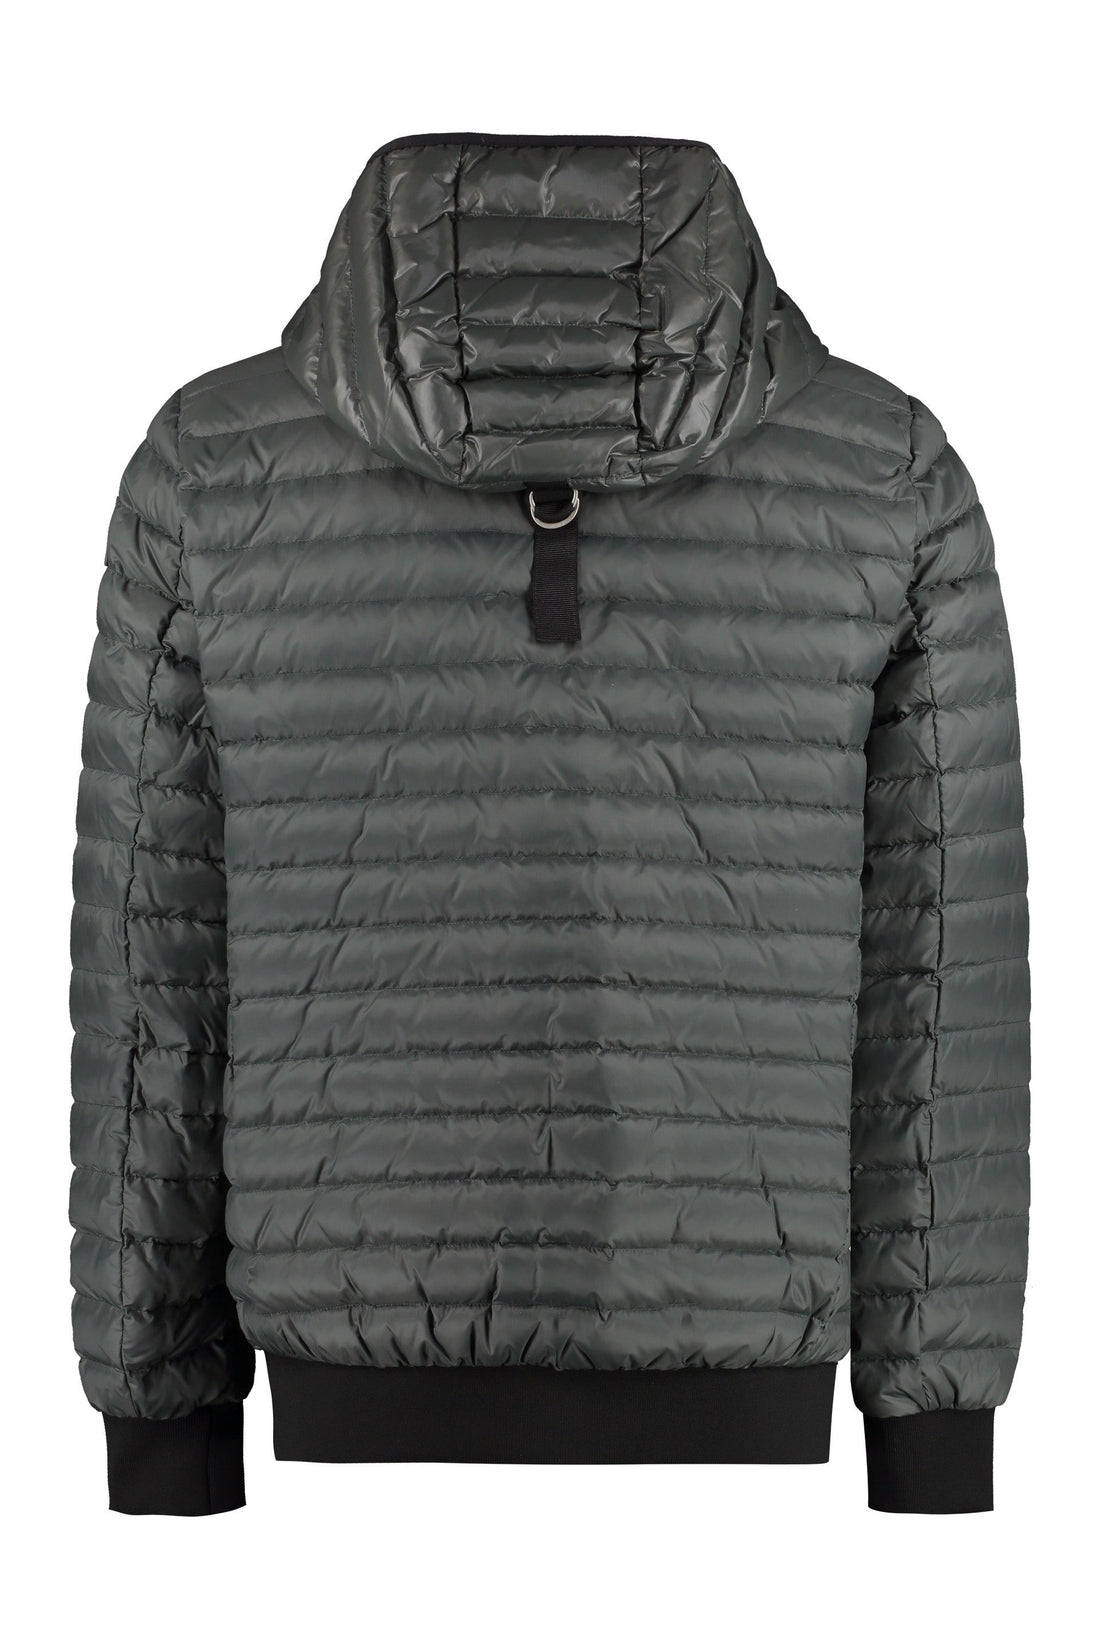 Moose Knuckles-OUTLET-SALE-Hooded full-zip down jacket-ARCHIVIST